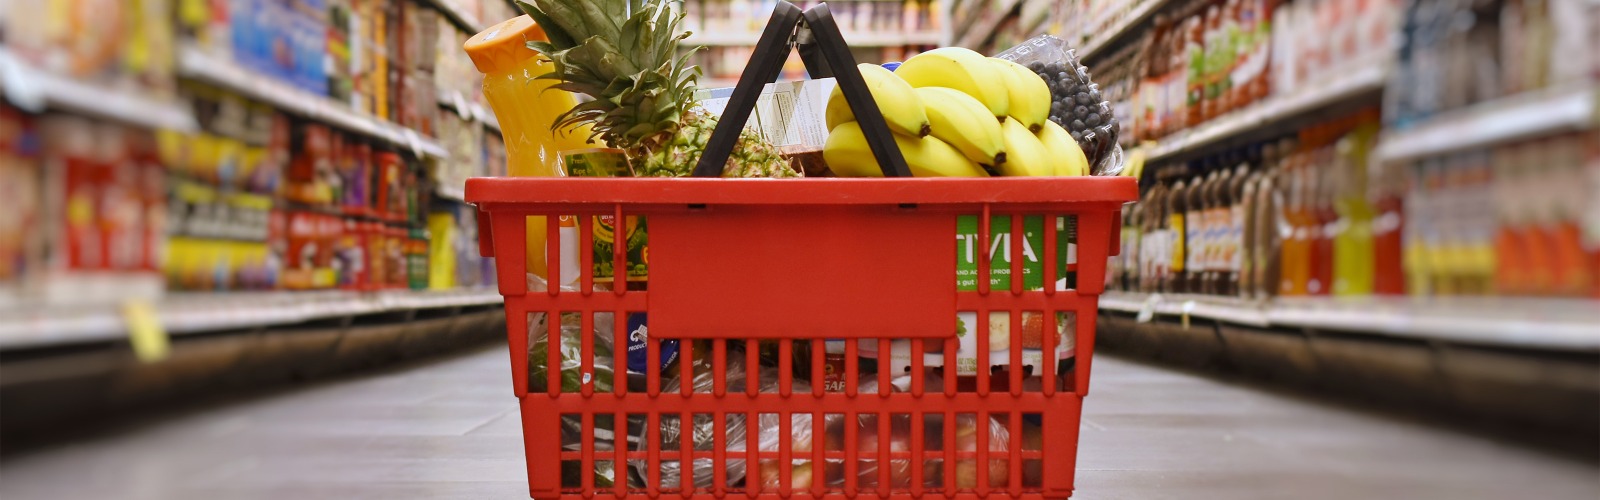 Shopping basket in supermarket 